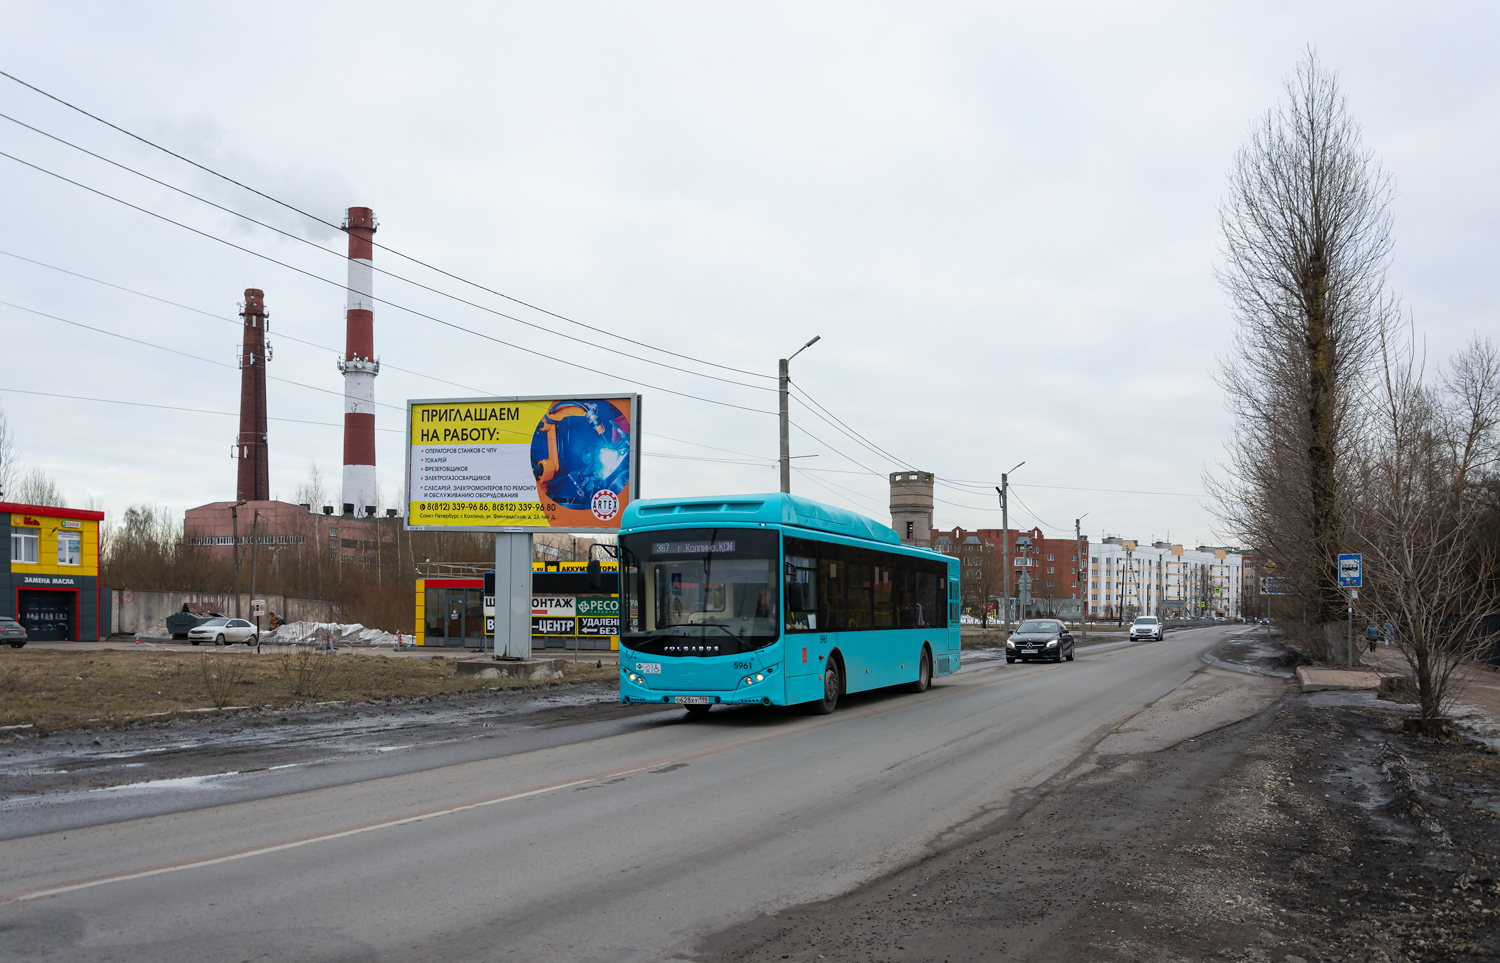 Saint Petersburg, Volgabus-5270.G2 (CNG) # 5961